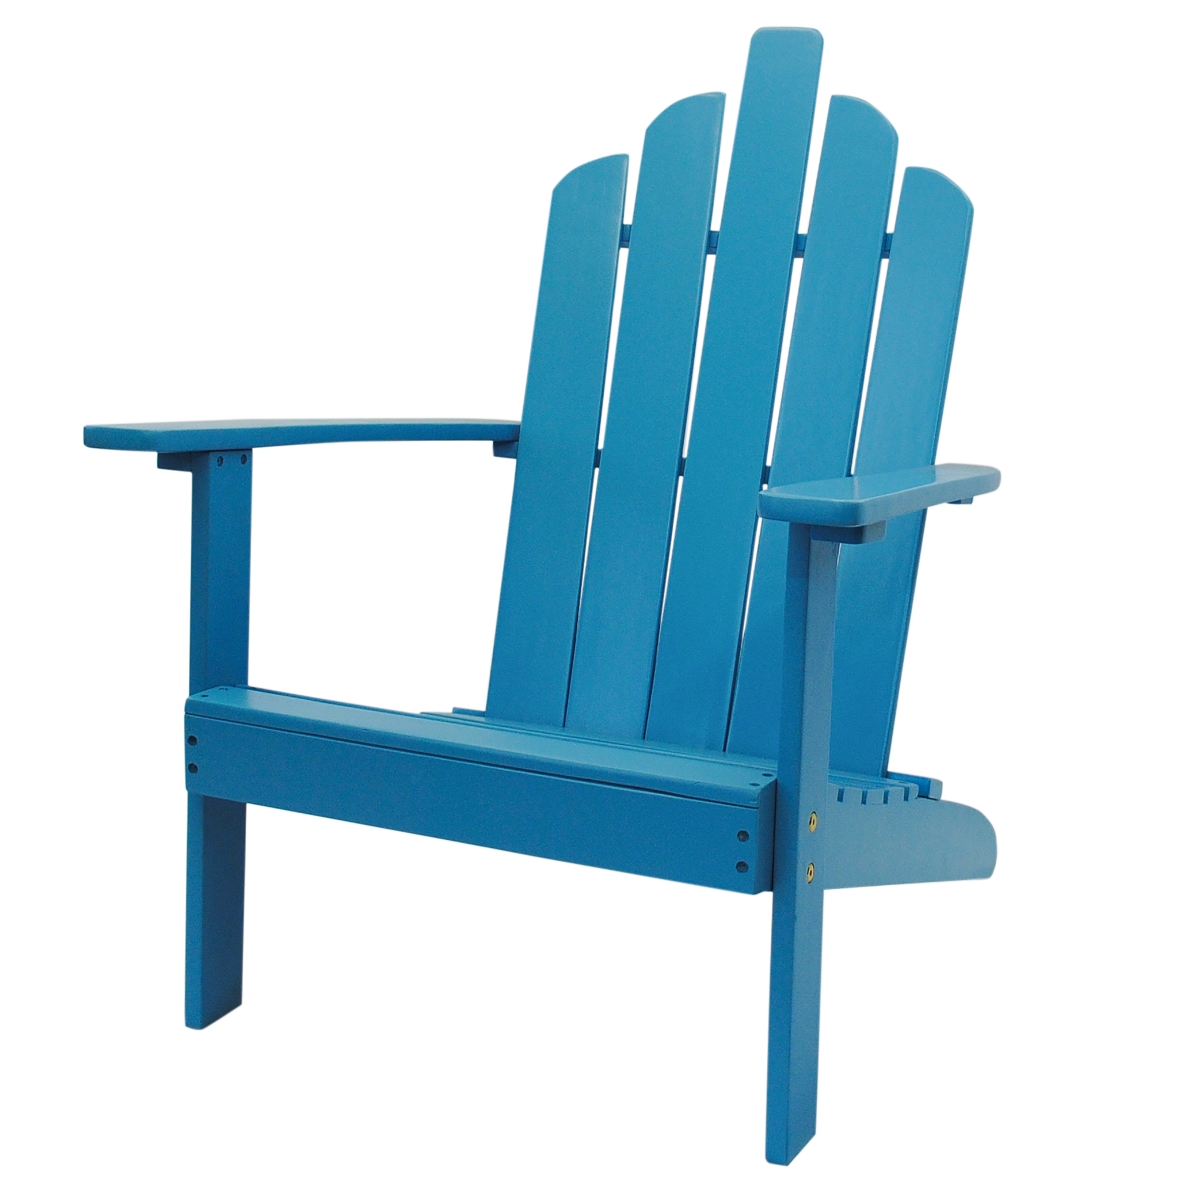 2003071 Outdoor Patio Wood Adirondack Chair, Turquoise